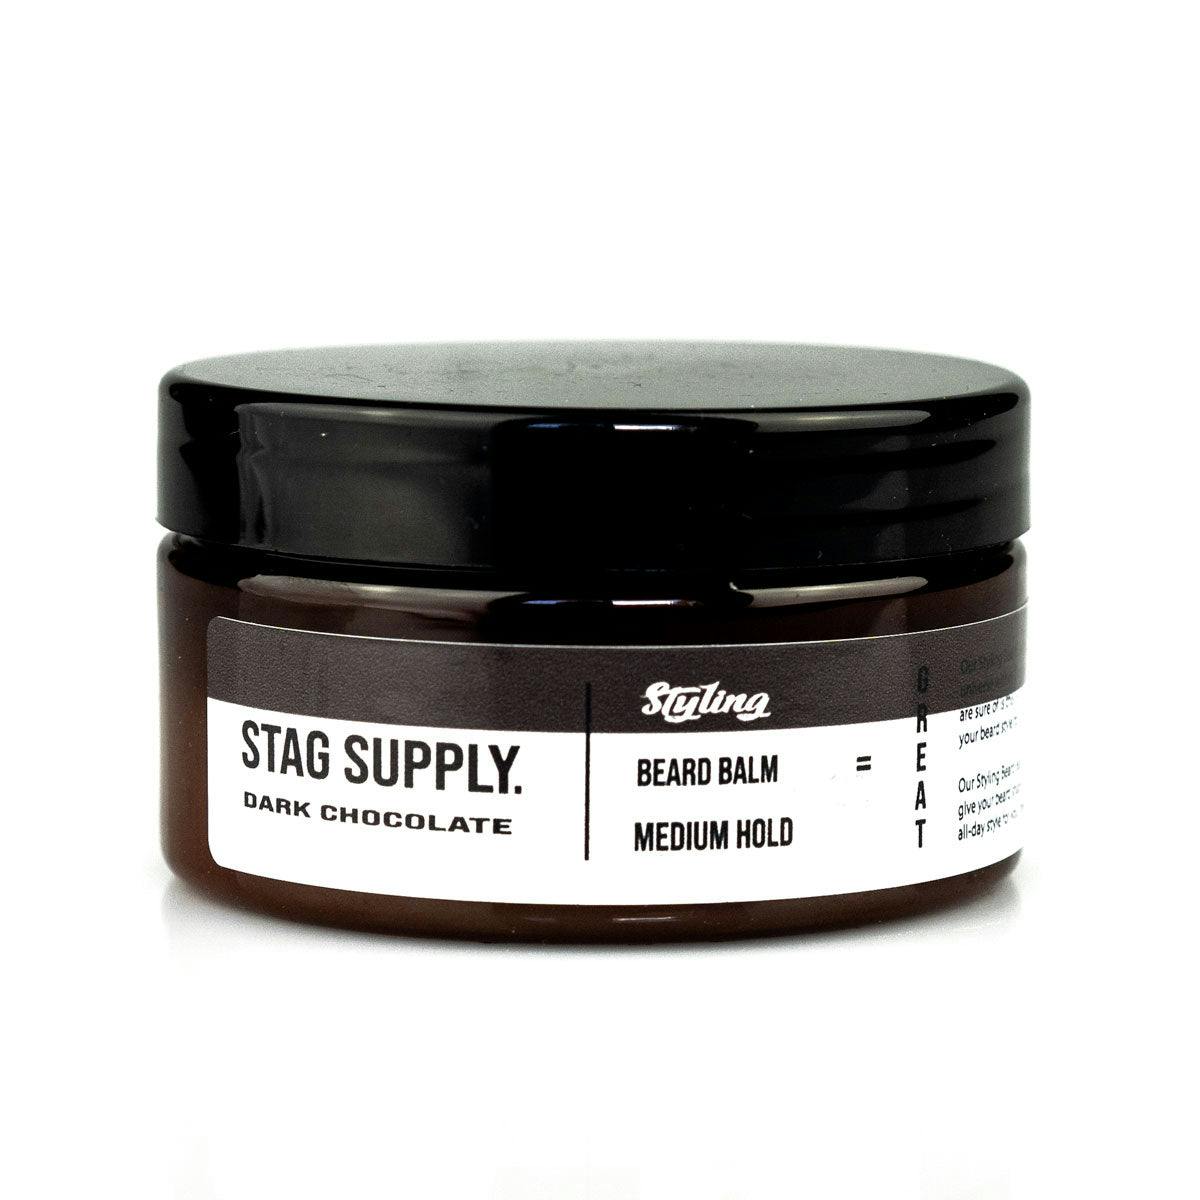 Stag Supply Styling Beard Balm - Dark Chocolate 100ml